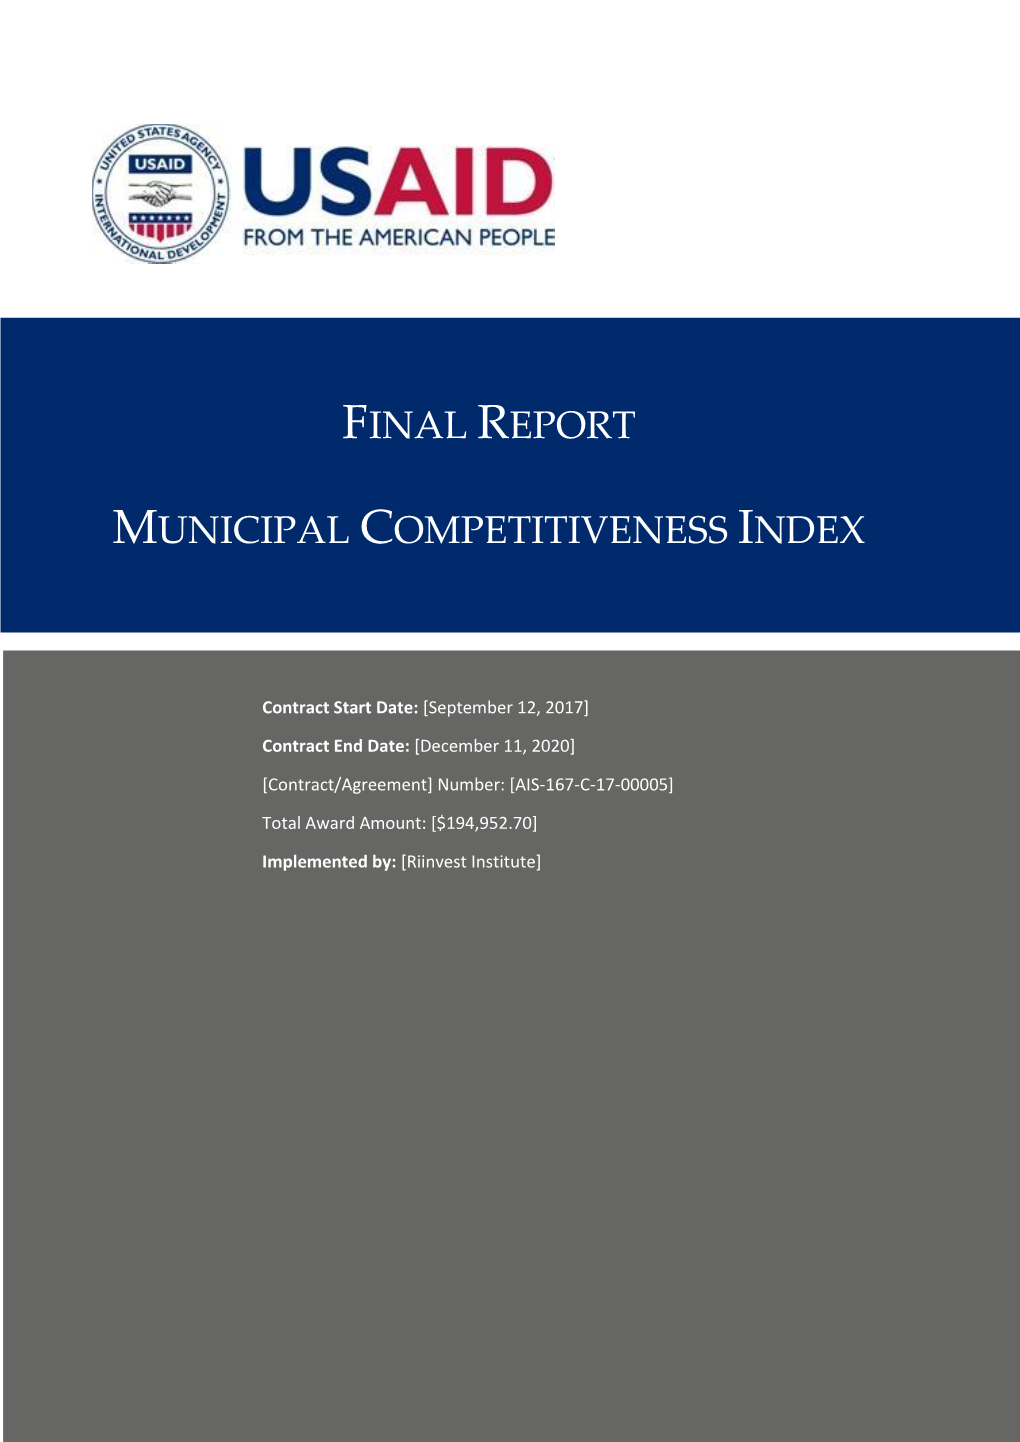 Final Report Municipal Competitiveness Index